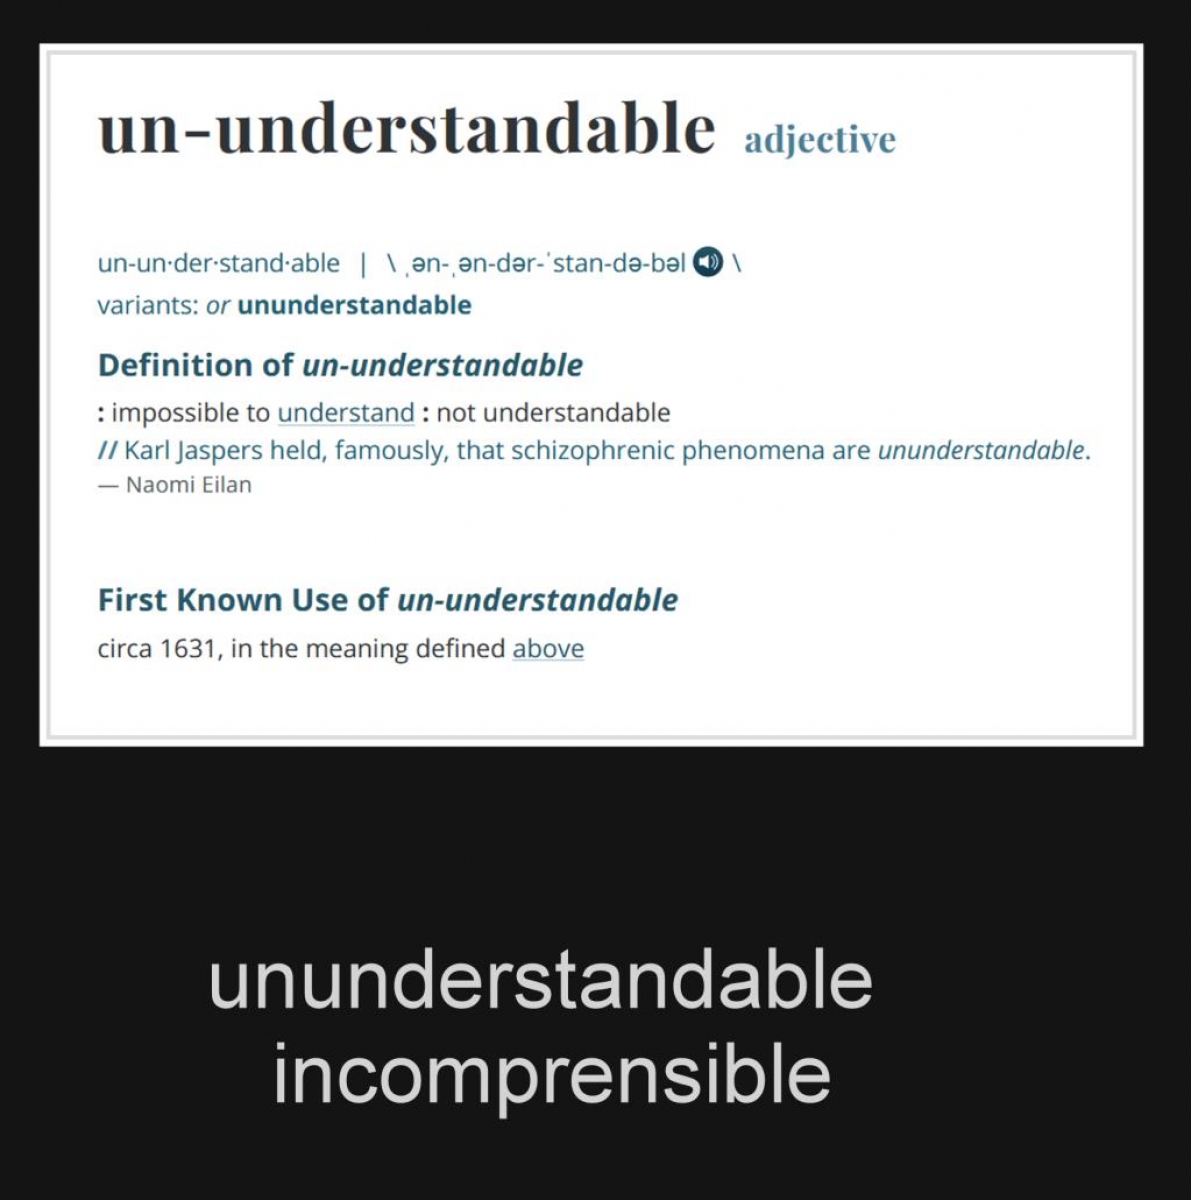 Un-understandable  --  Incomprensible.  (This is a PC screenshot. Impresin de pantalla de PC). Copyright Merriam Webster Dictionary.